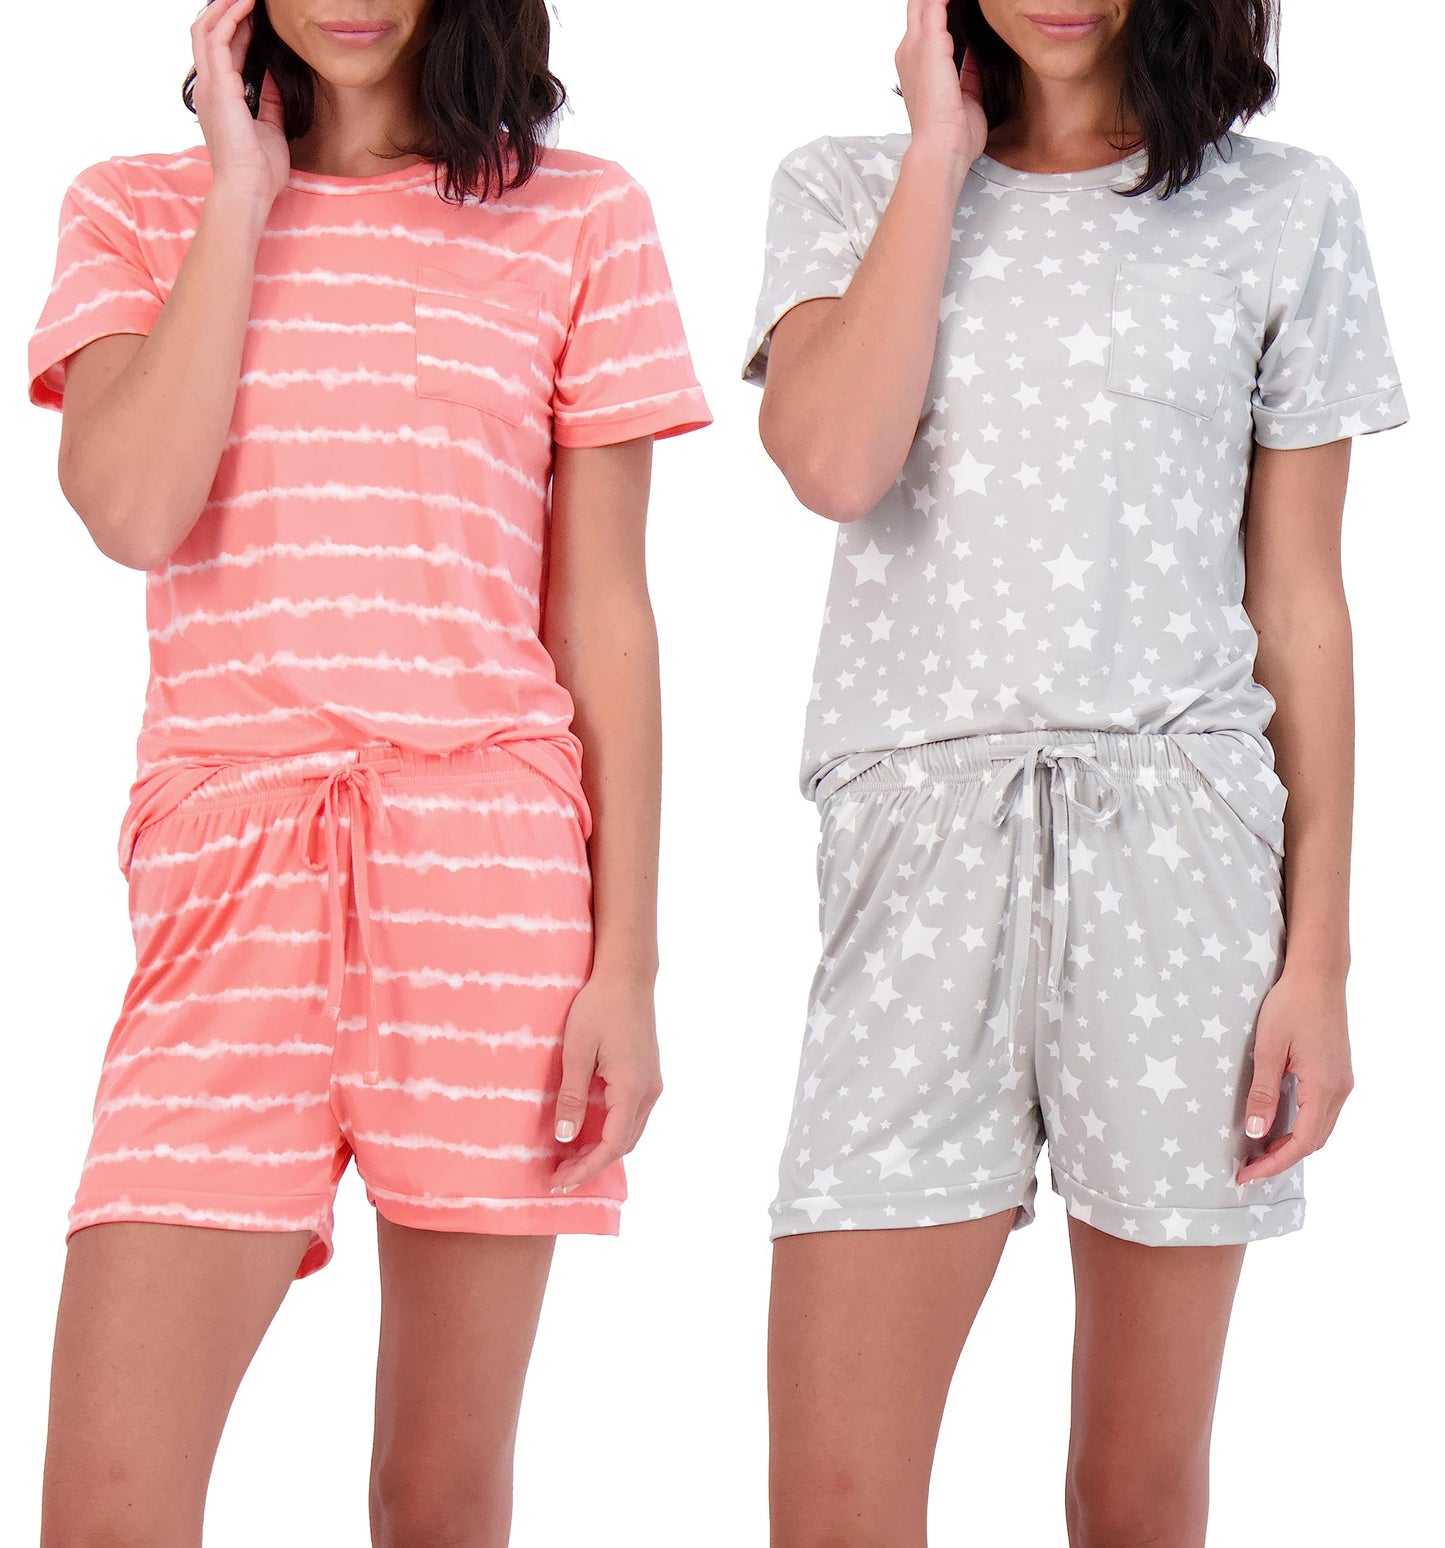 Women’s Short Sleeve Top with Shorts Pajama Set